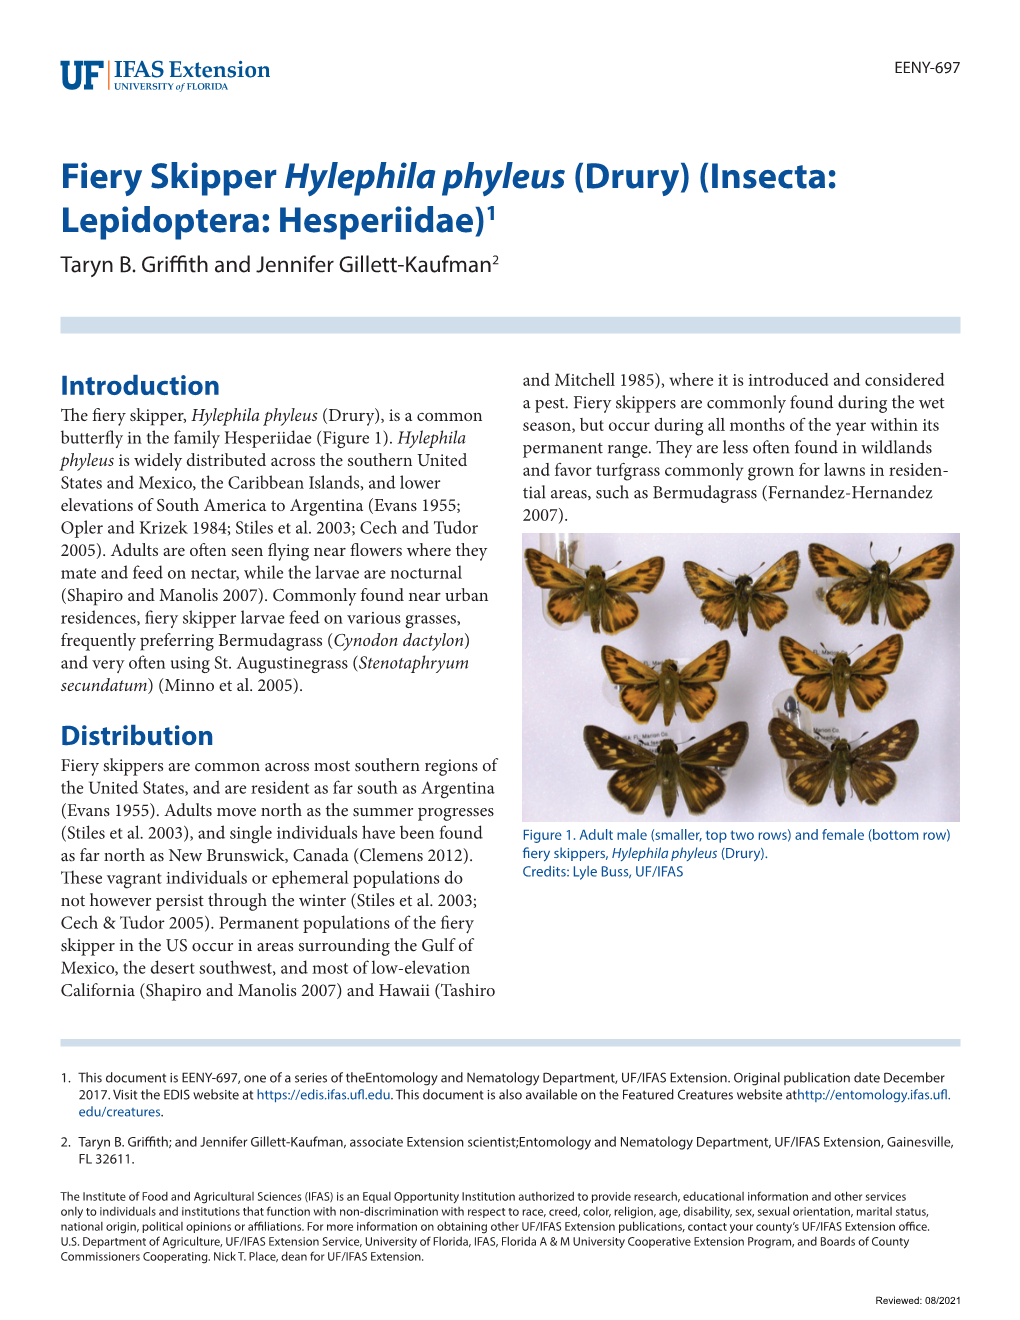 Fiery Skipper Hylephila Phyleus (Drury) (Insecta: Lepidoptera: Hesperiidae)1 Taryn B